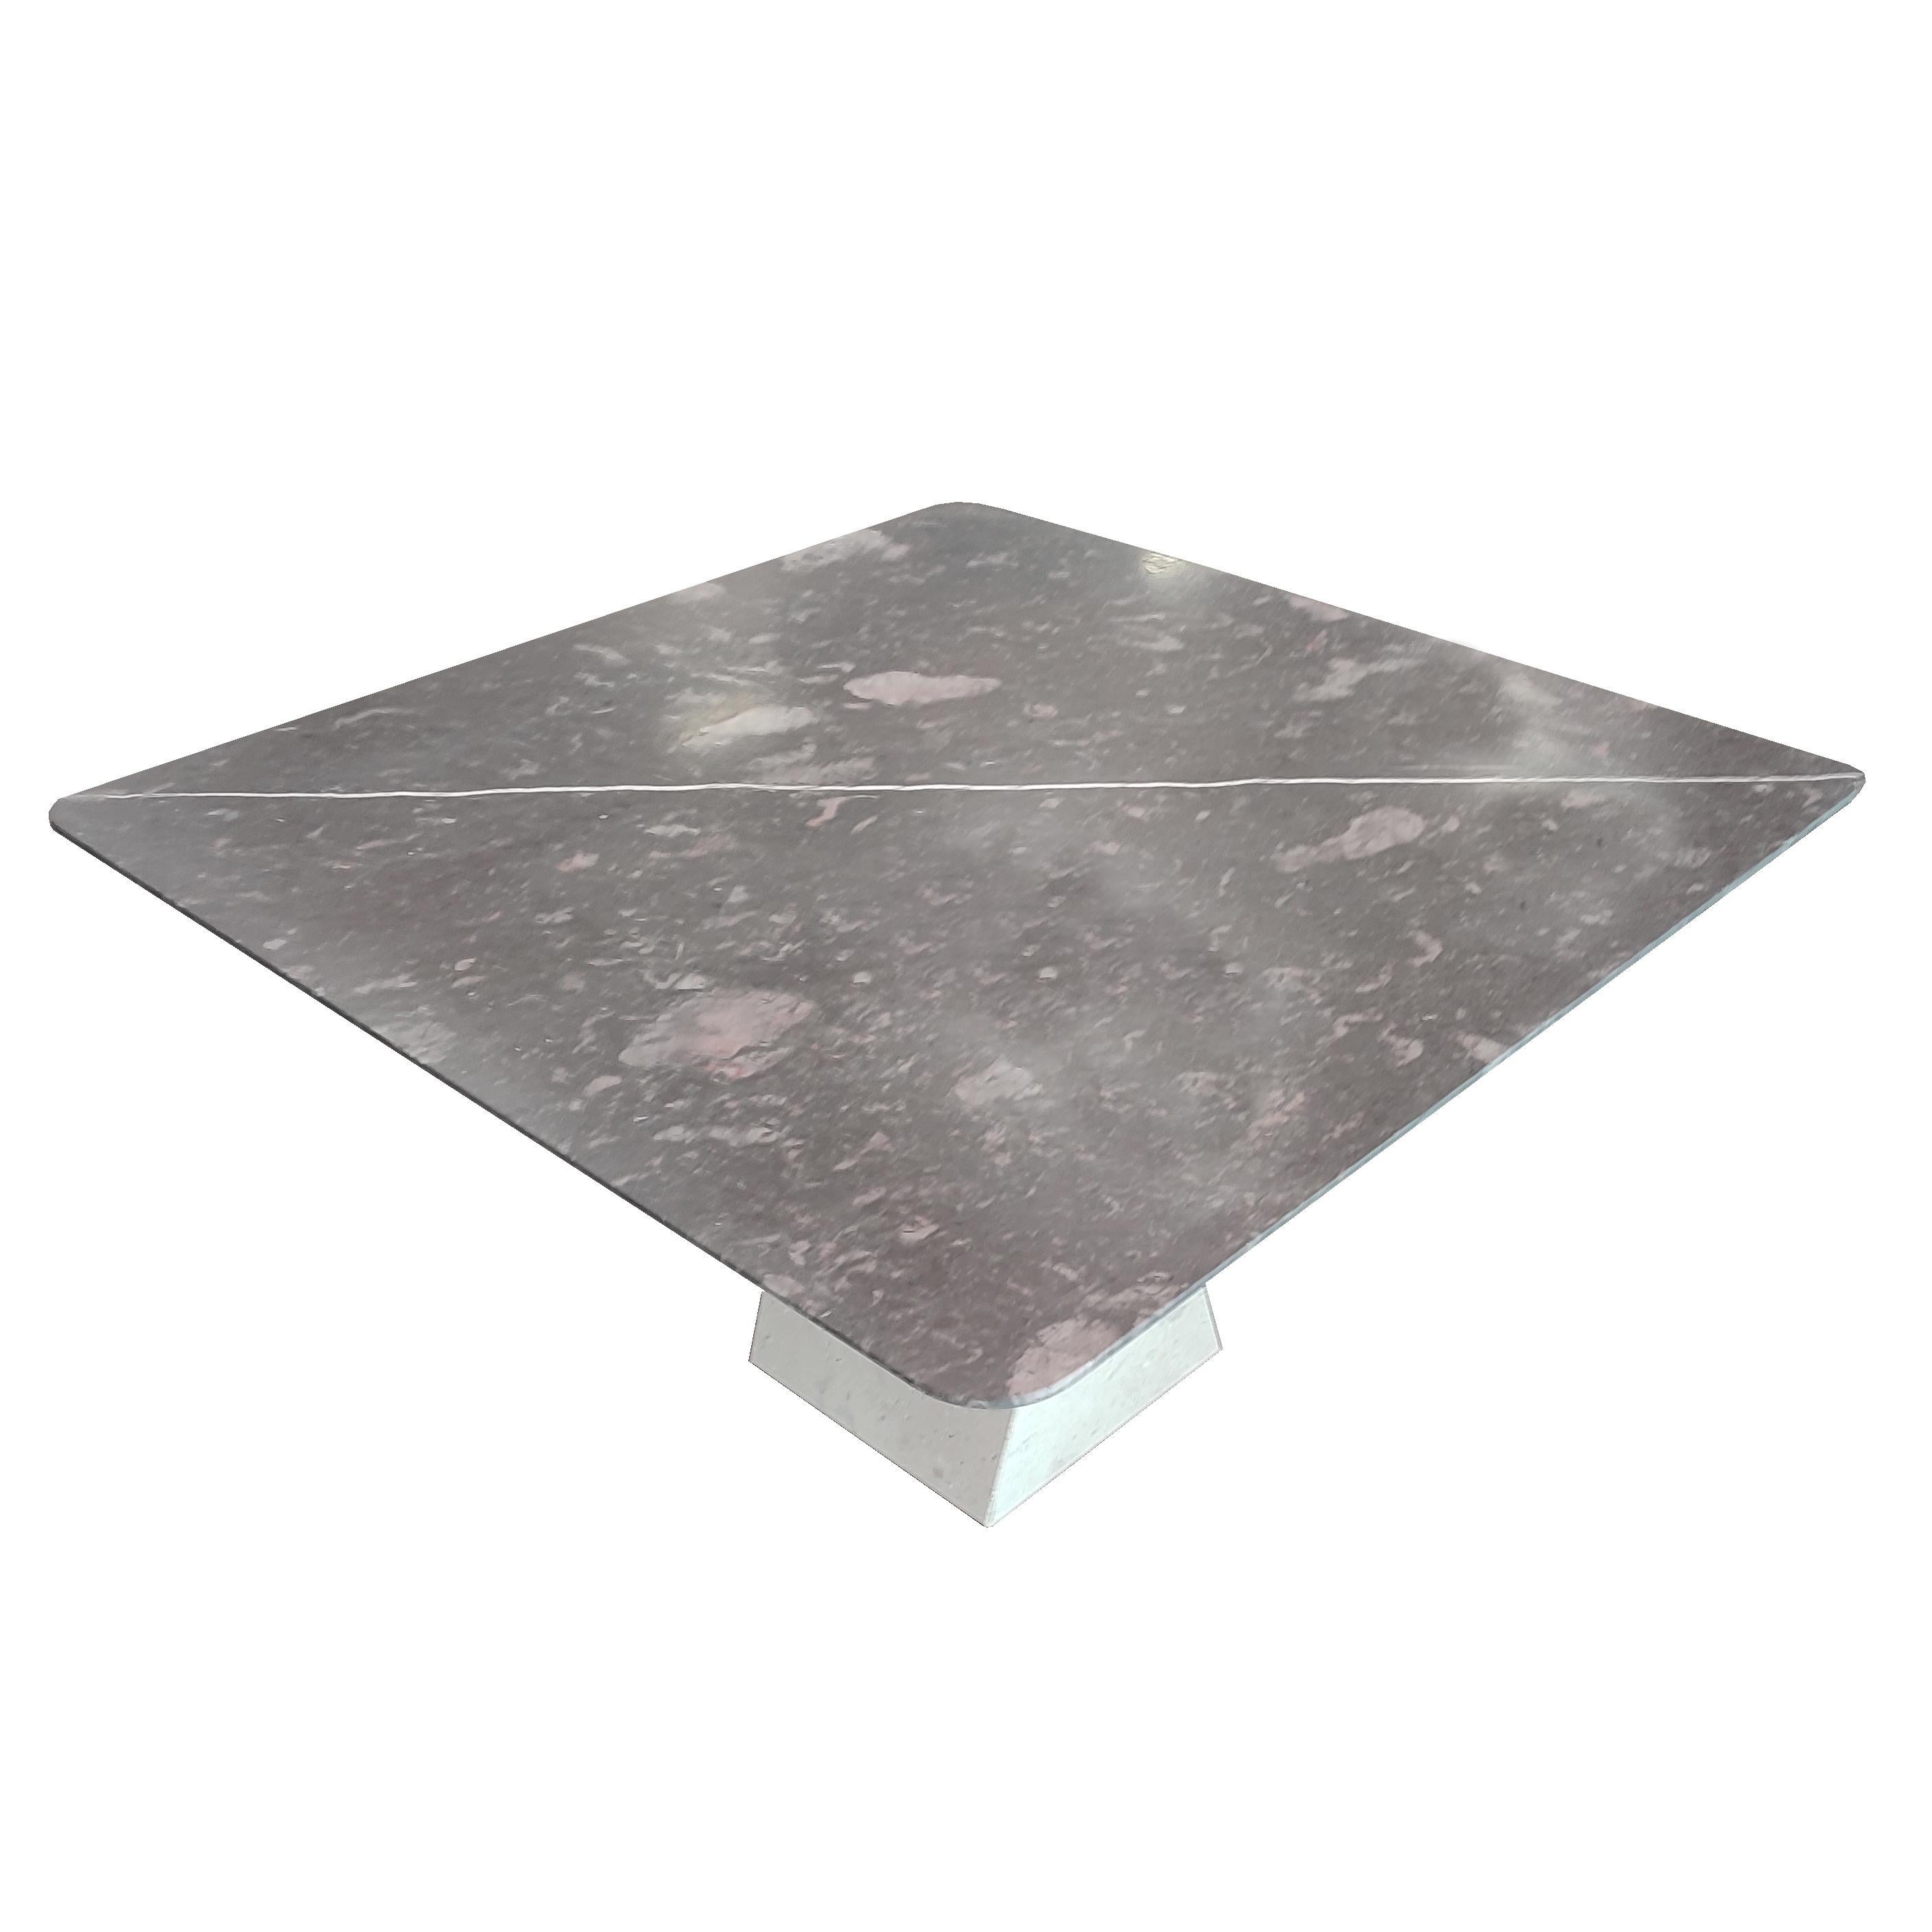 Metal Zaleo Dining Marble Contemporary Table Campaspero & Purple Stone Meddel in Stock For Sale